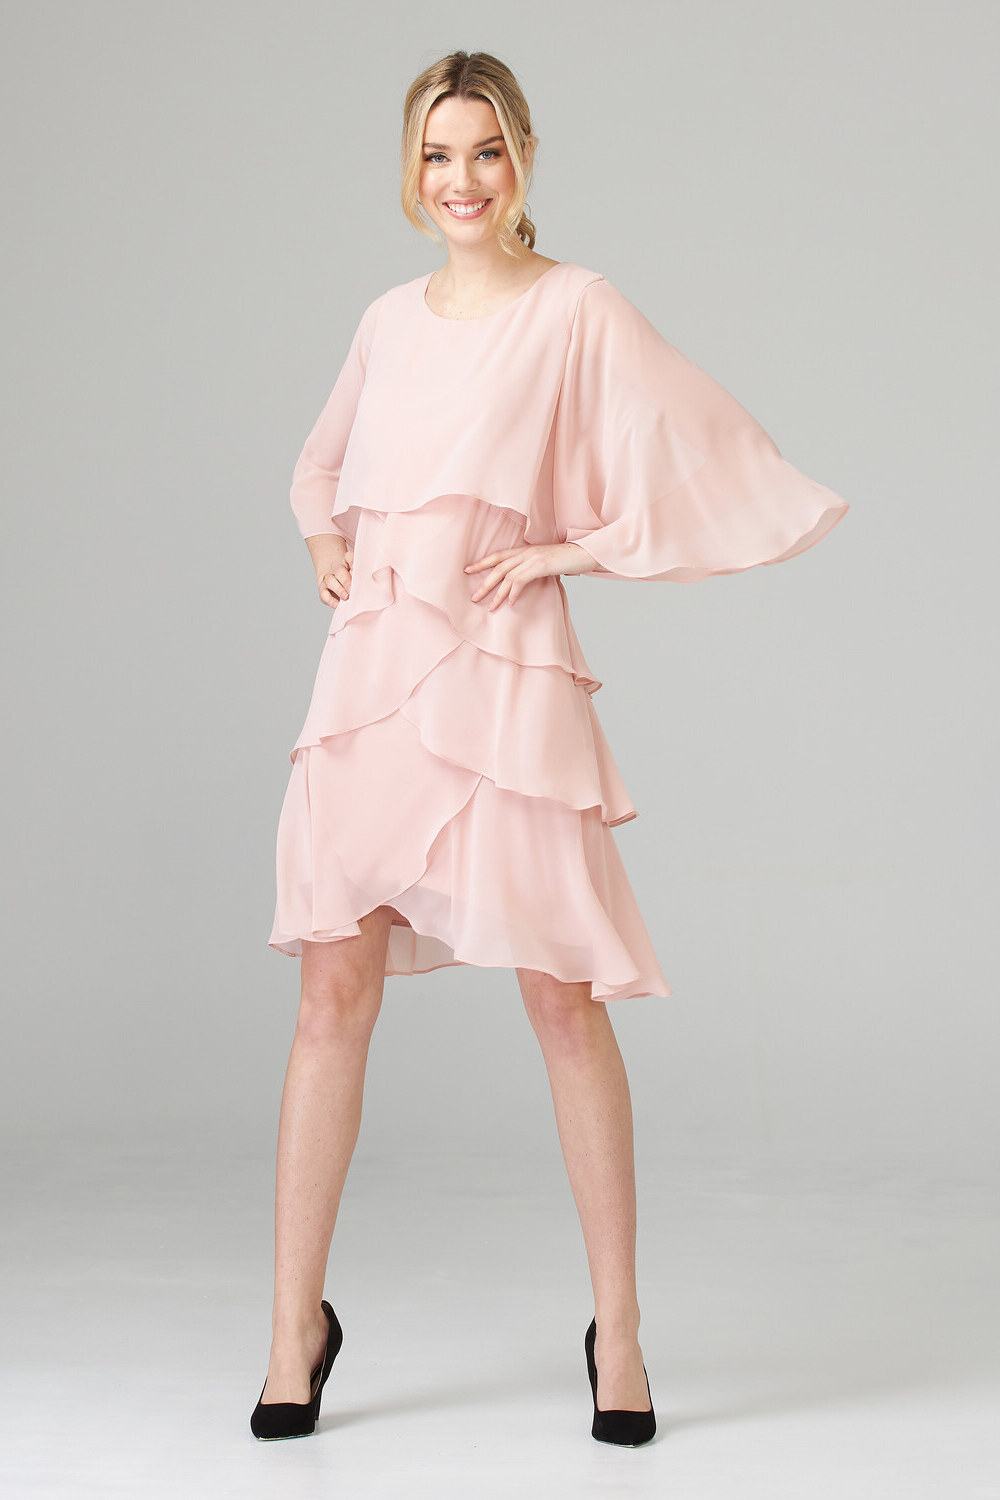 Joseph Ribkoff Dress Style 201176. Rose